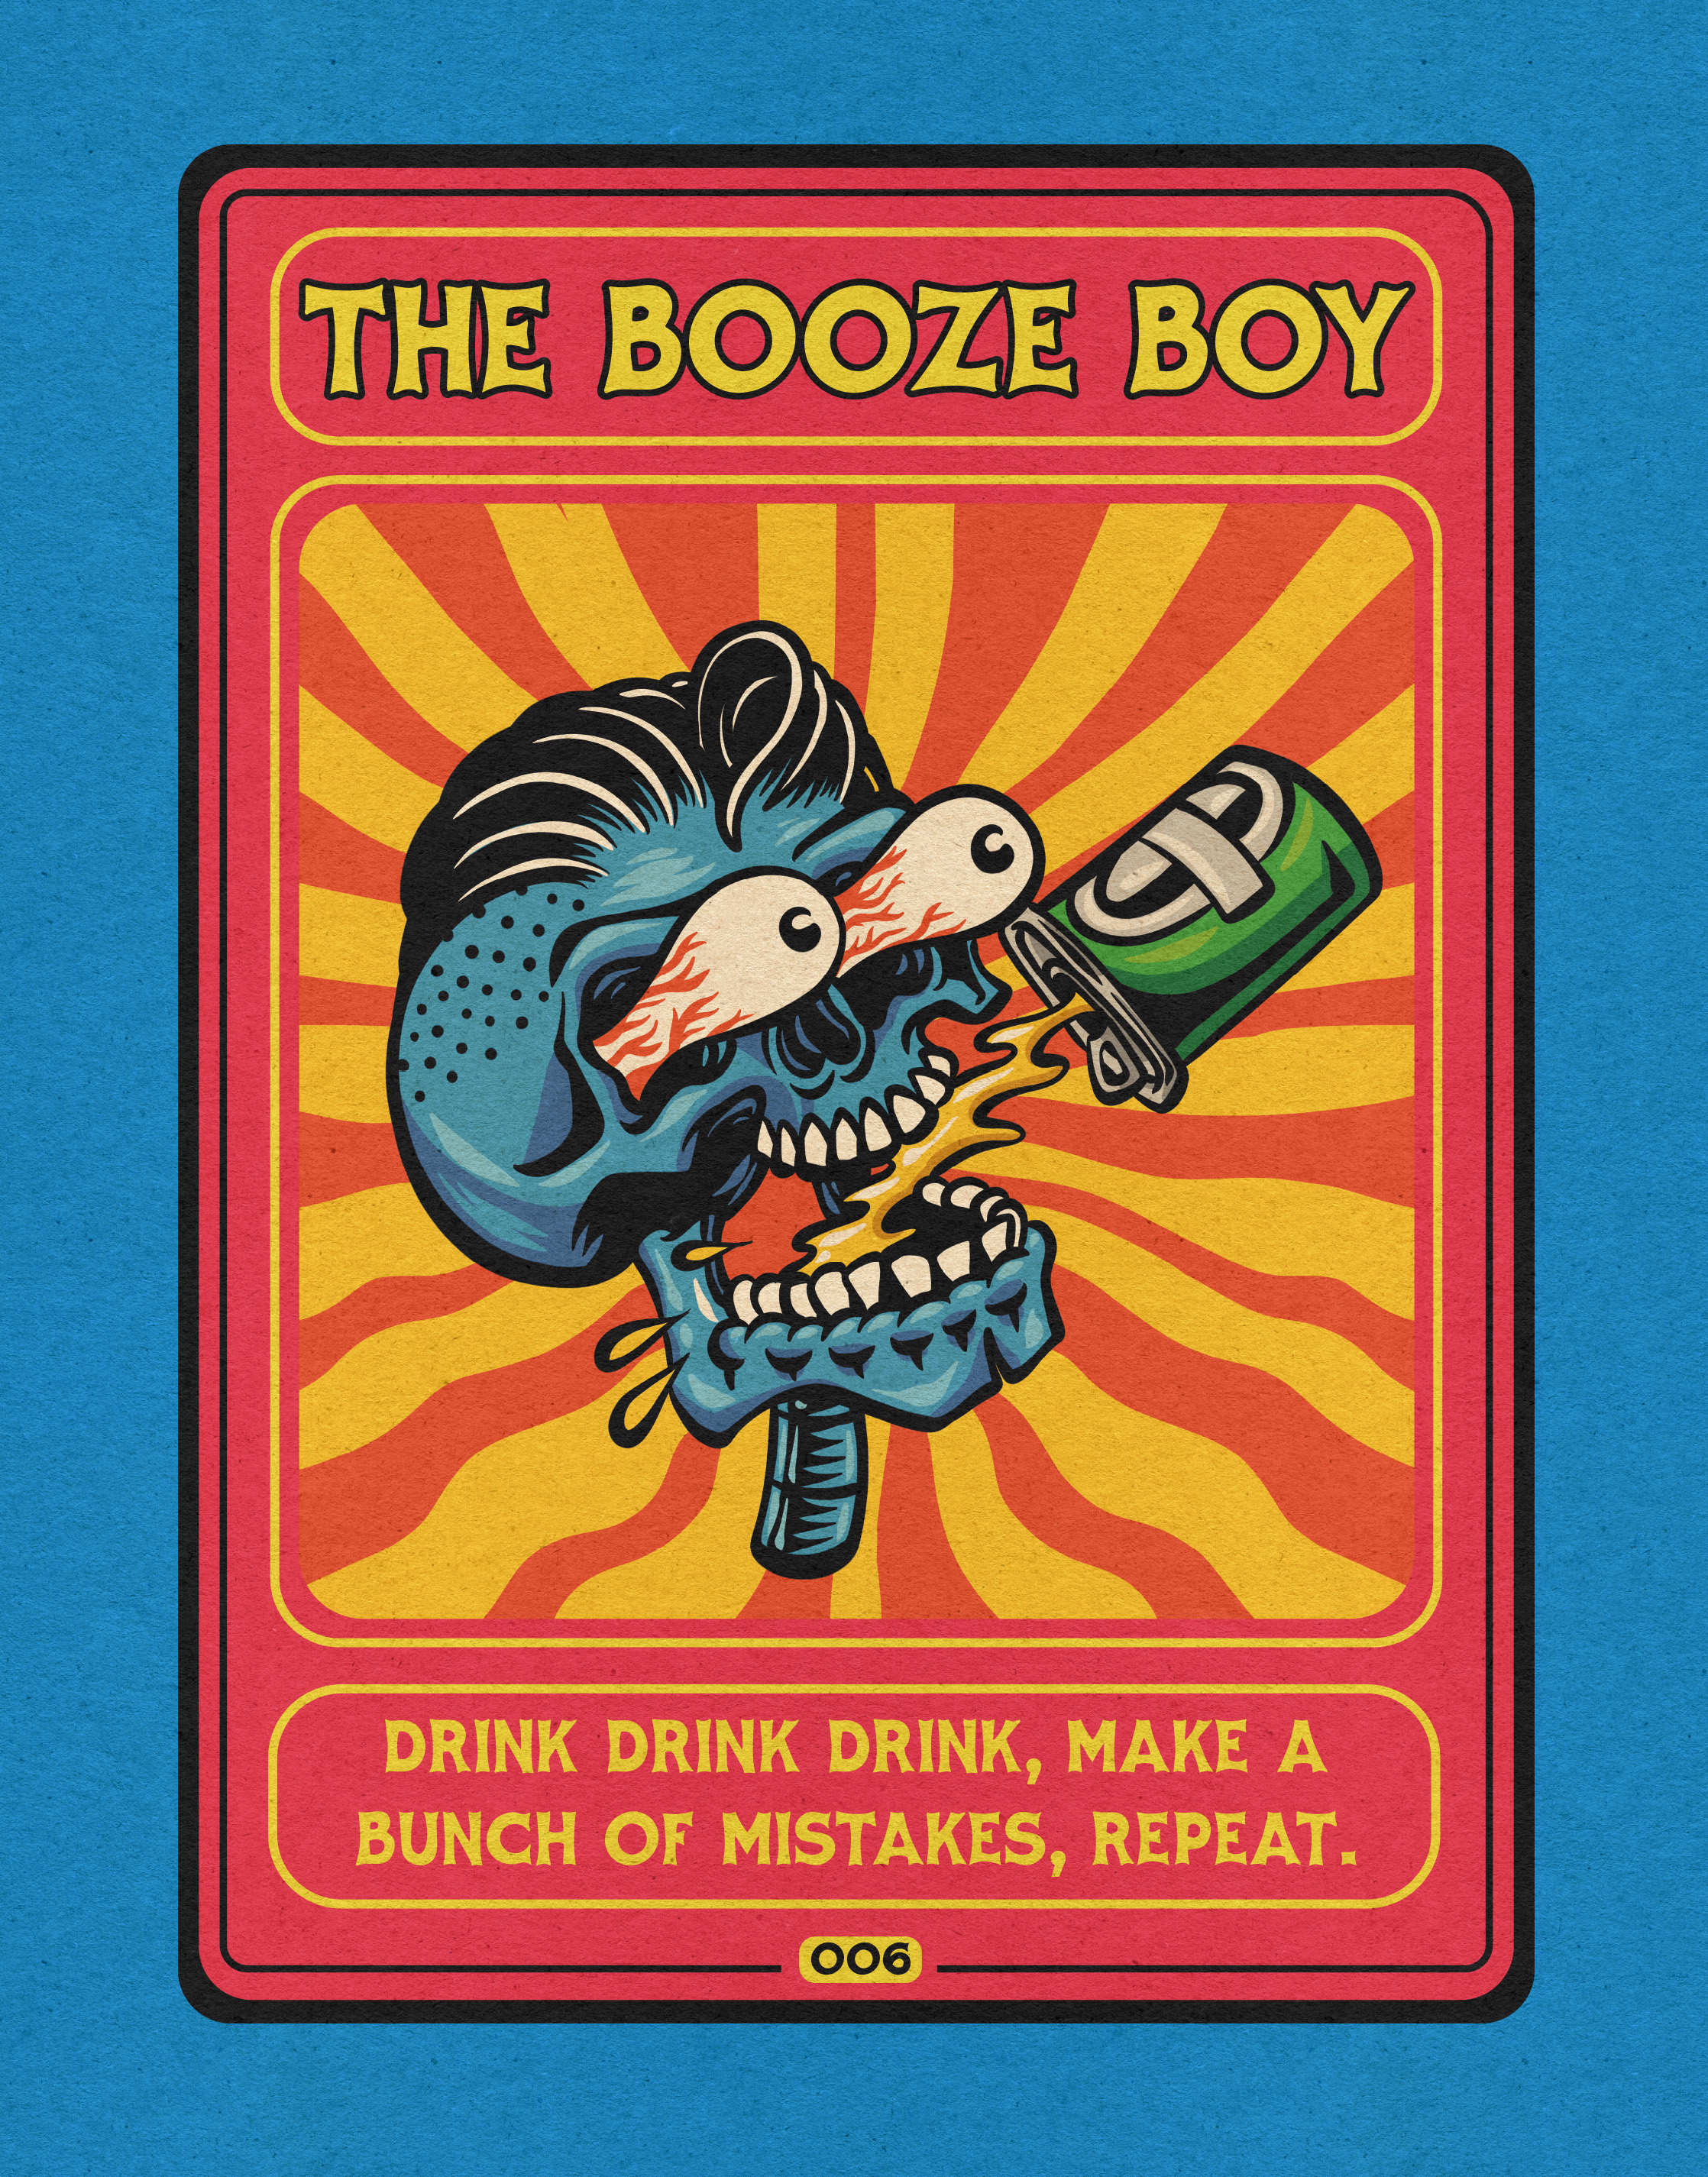 #006 / The Booze Boy